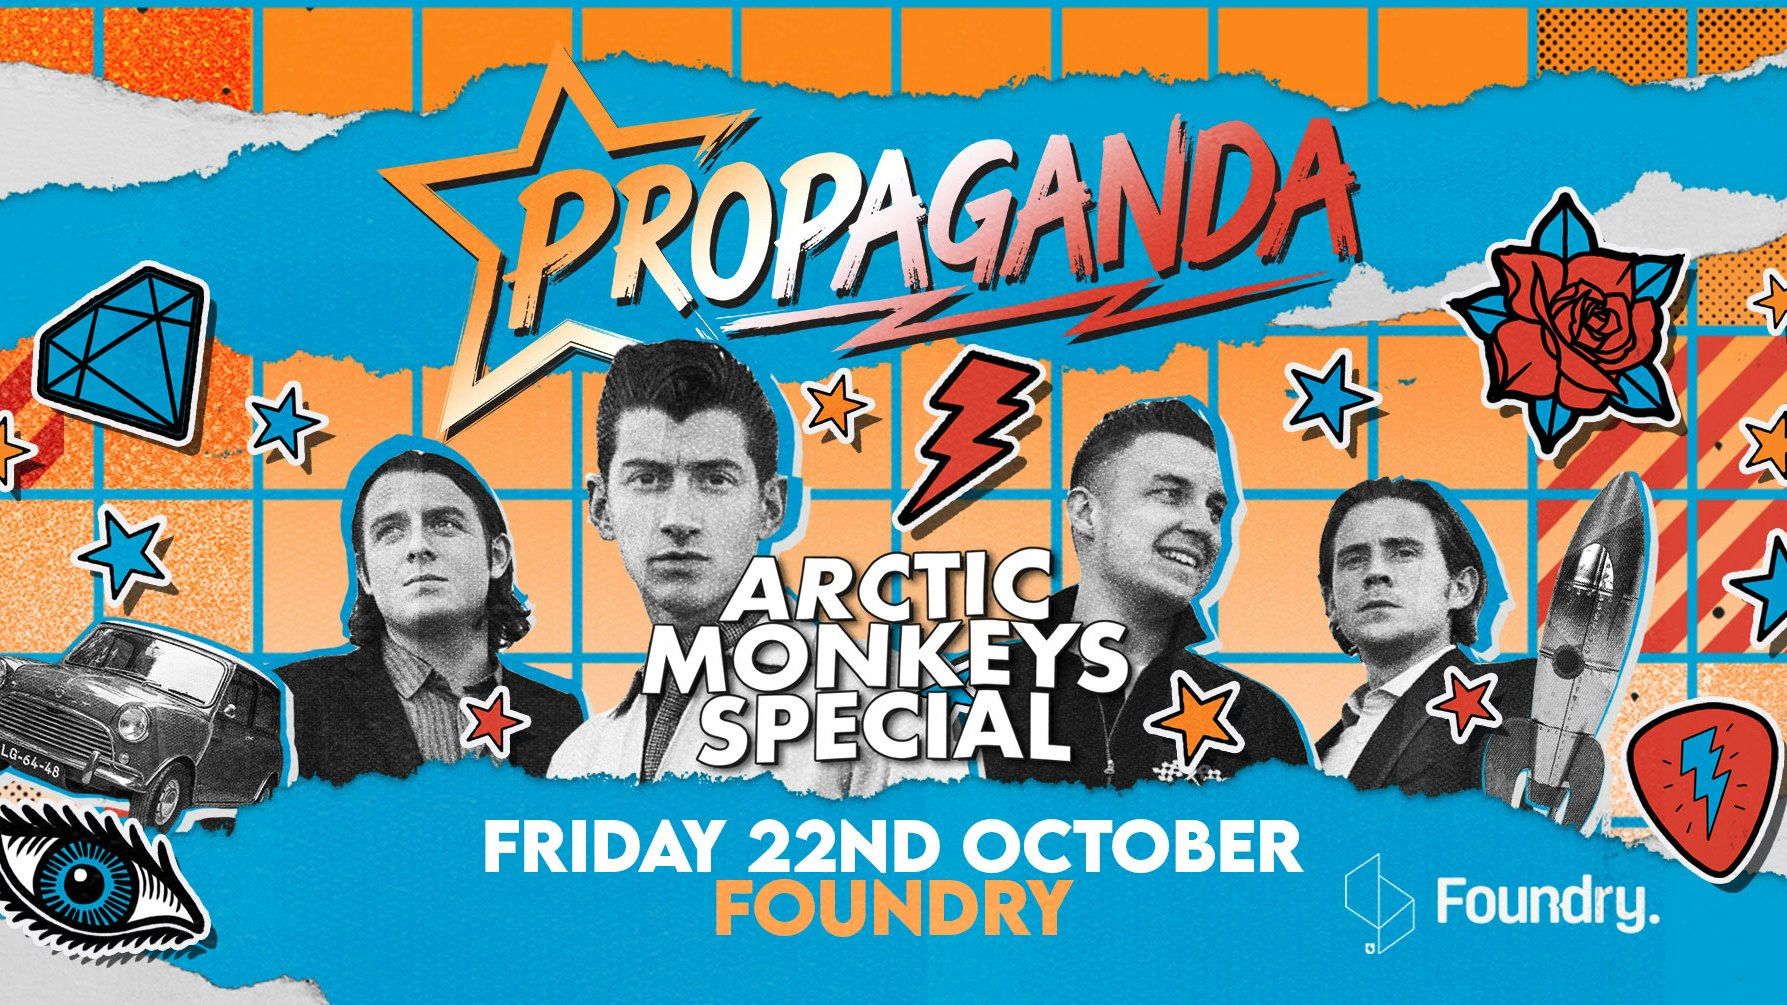 Propaganda Sheffield – Arctic Monkeys Special!